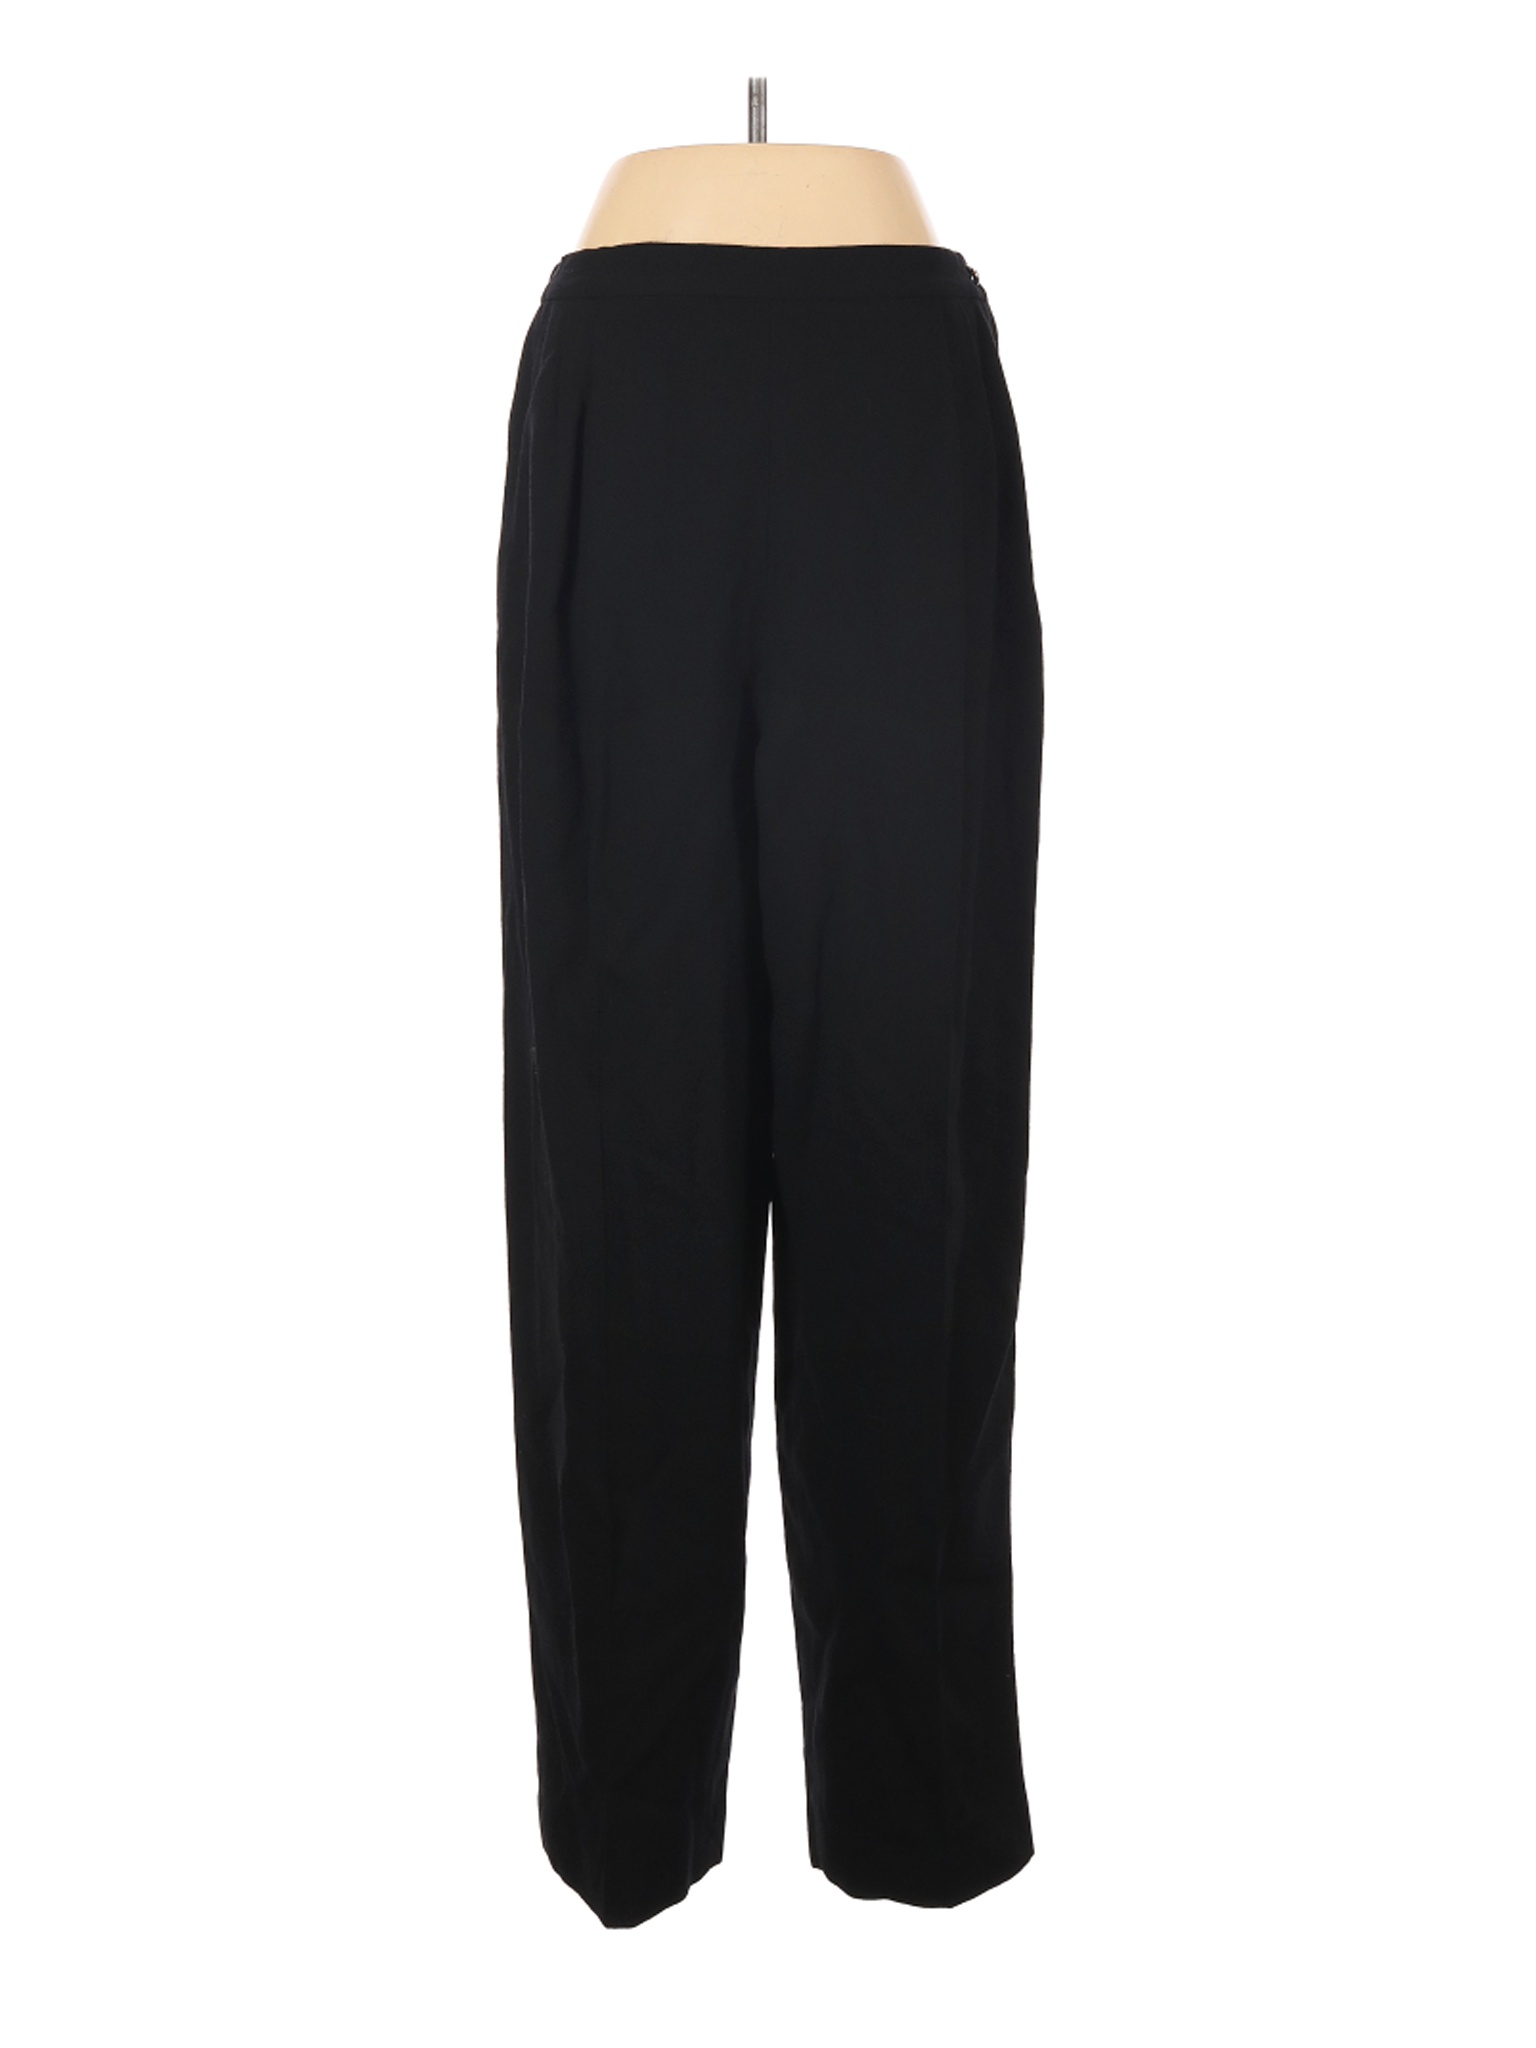 Unbranded Women Black Wool Pants 14 | eBay